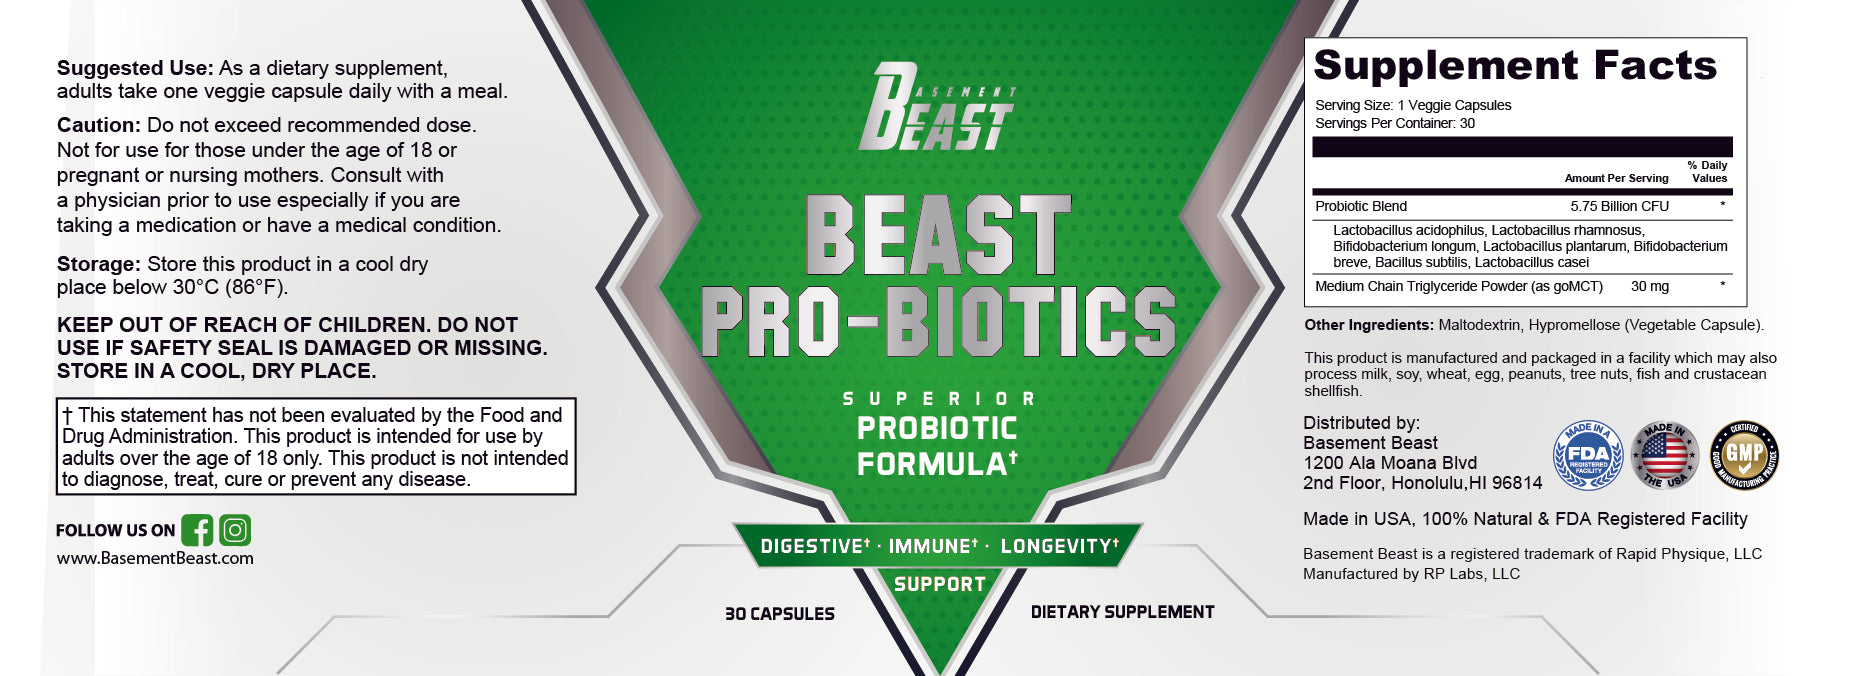 Beast Pro-Biotics